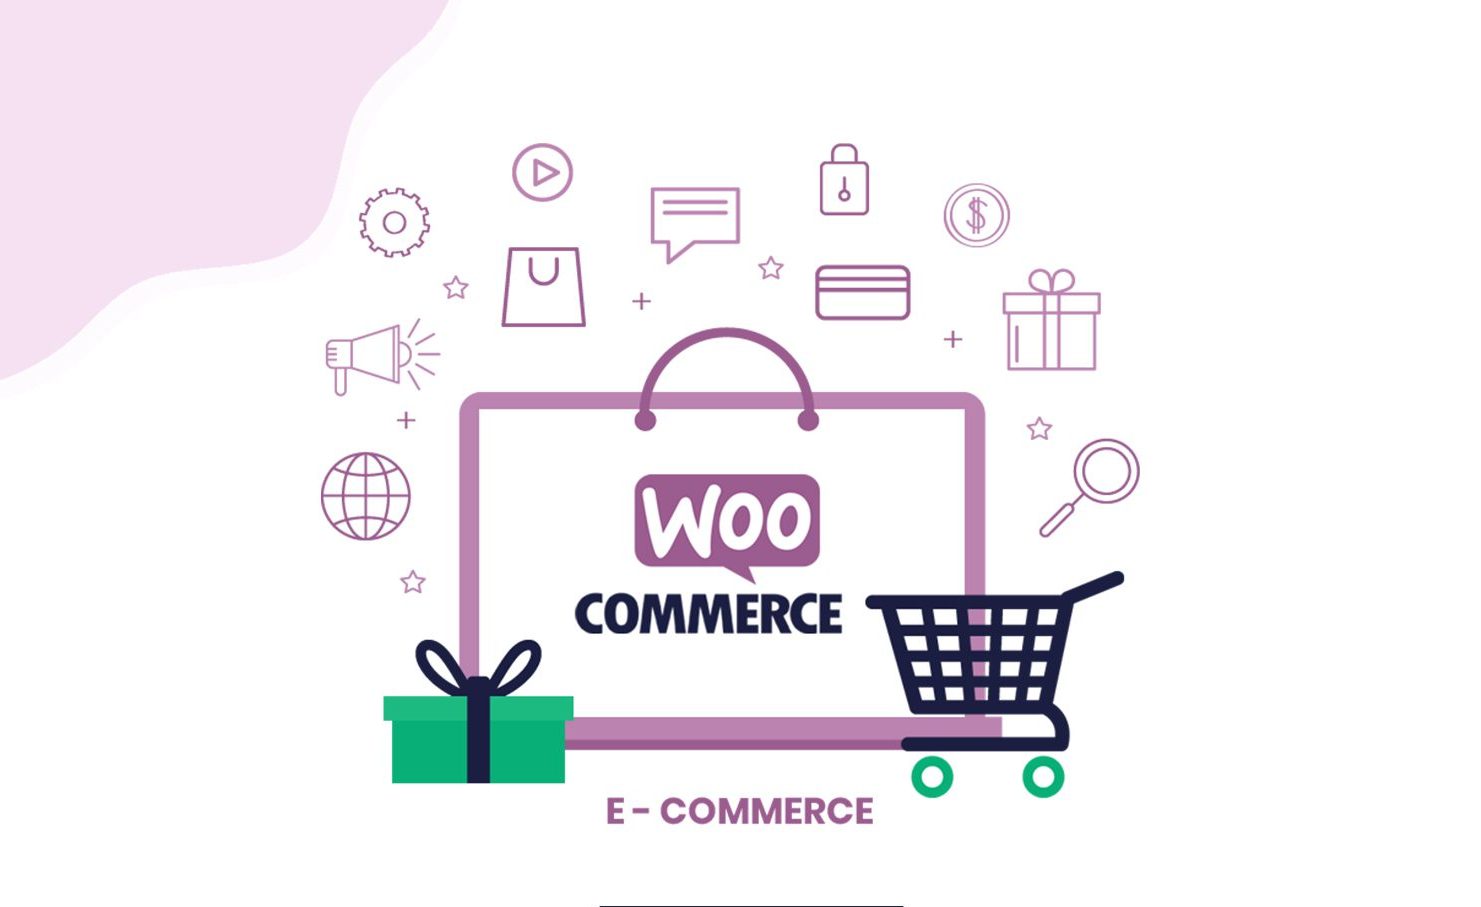 wocommerce - Online Ecommerce Store